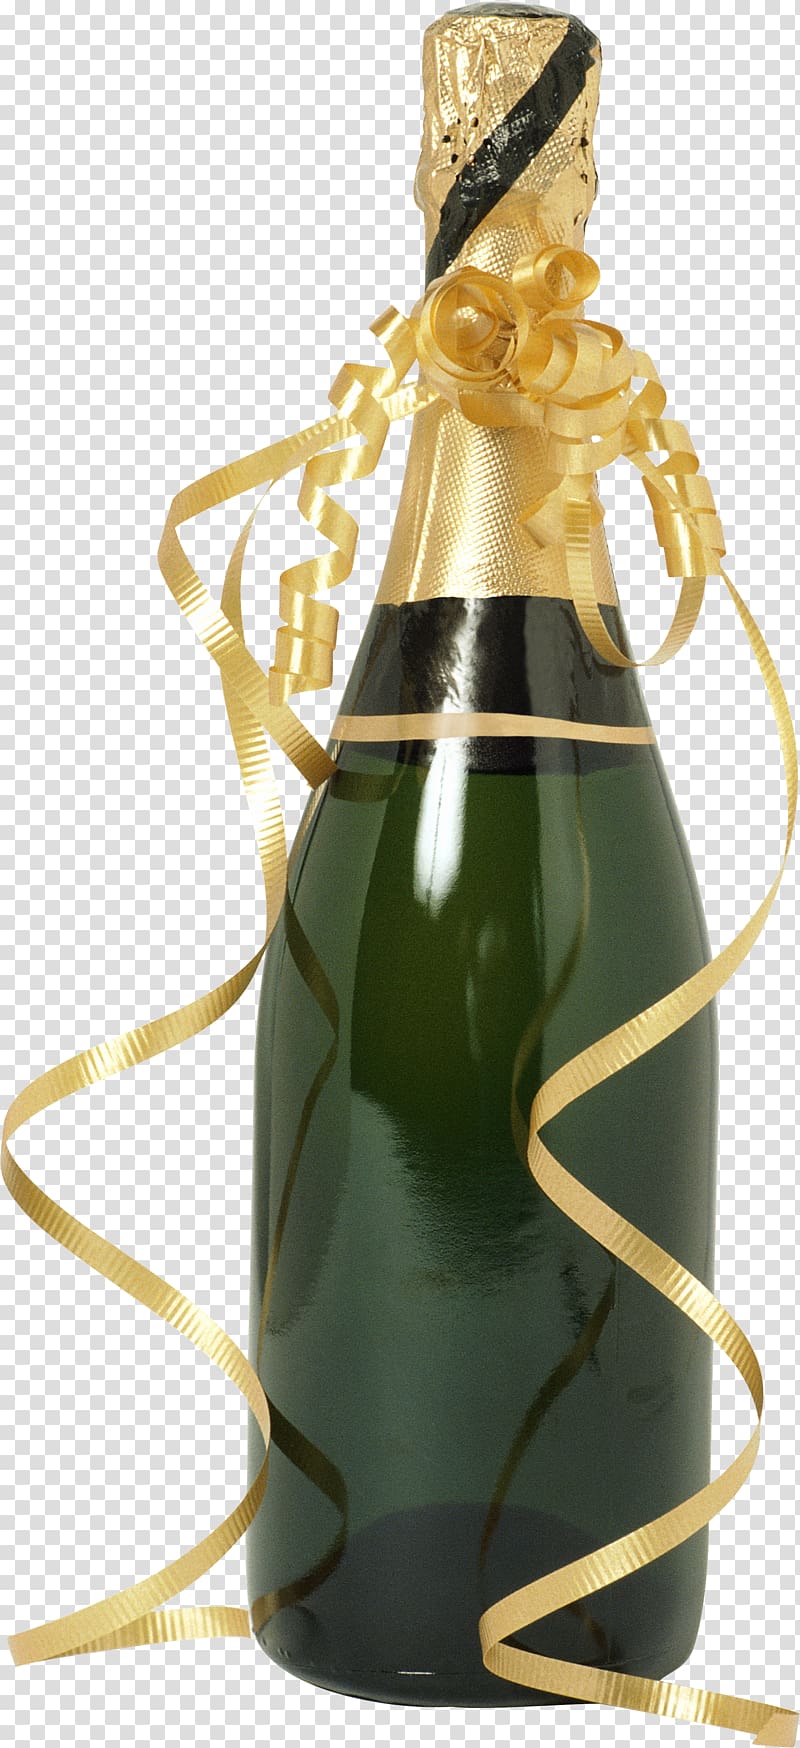 Champagne Wine Bottle, Champagne bottle transparent background PNG clipart